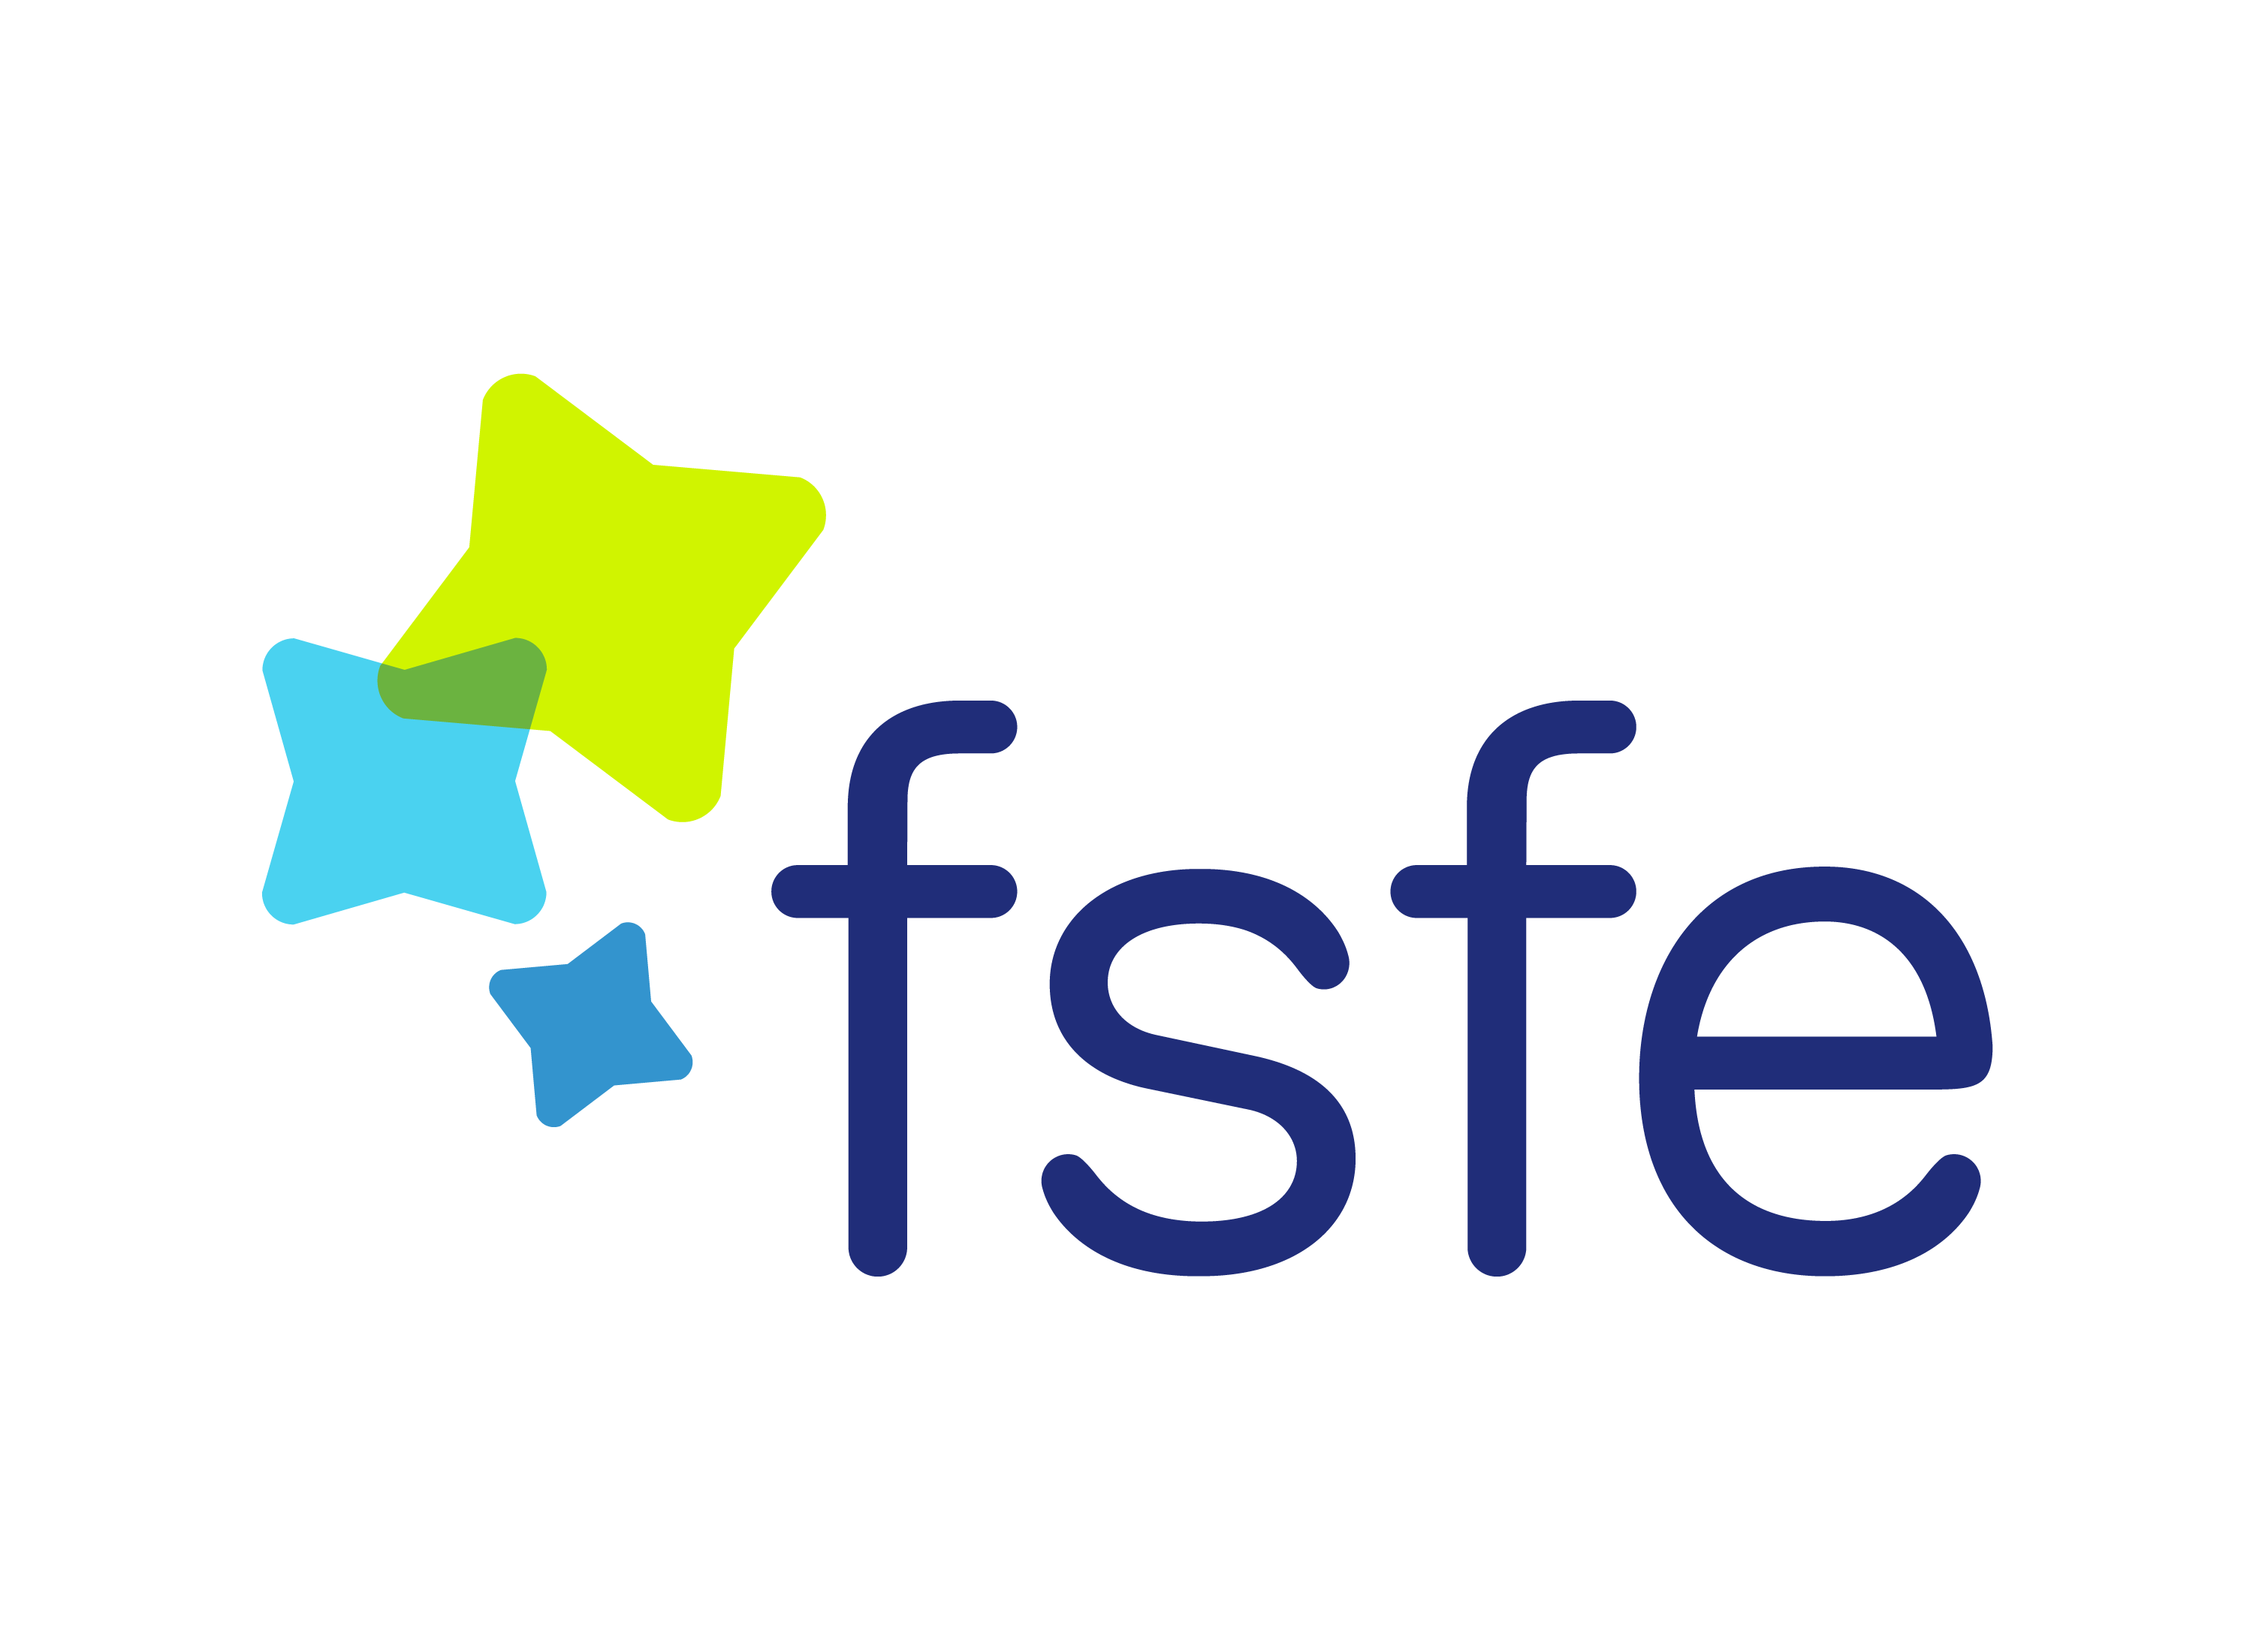 FSFE Free Software Foundation Europe